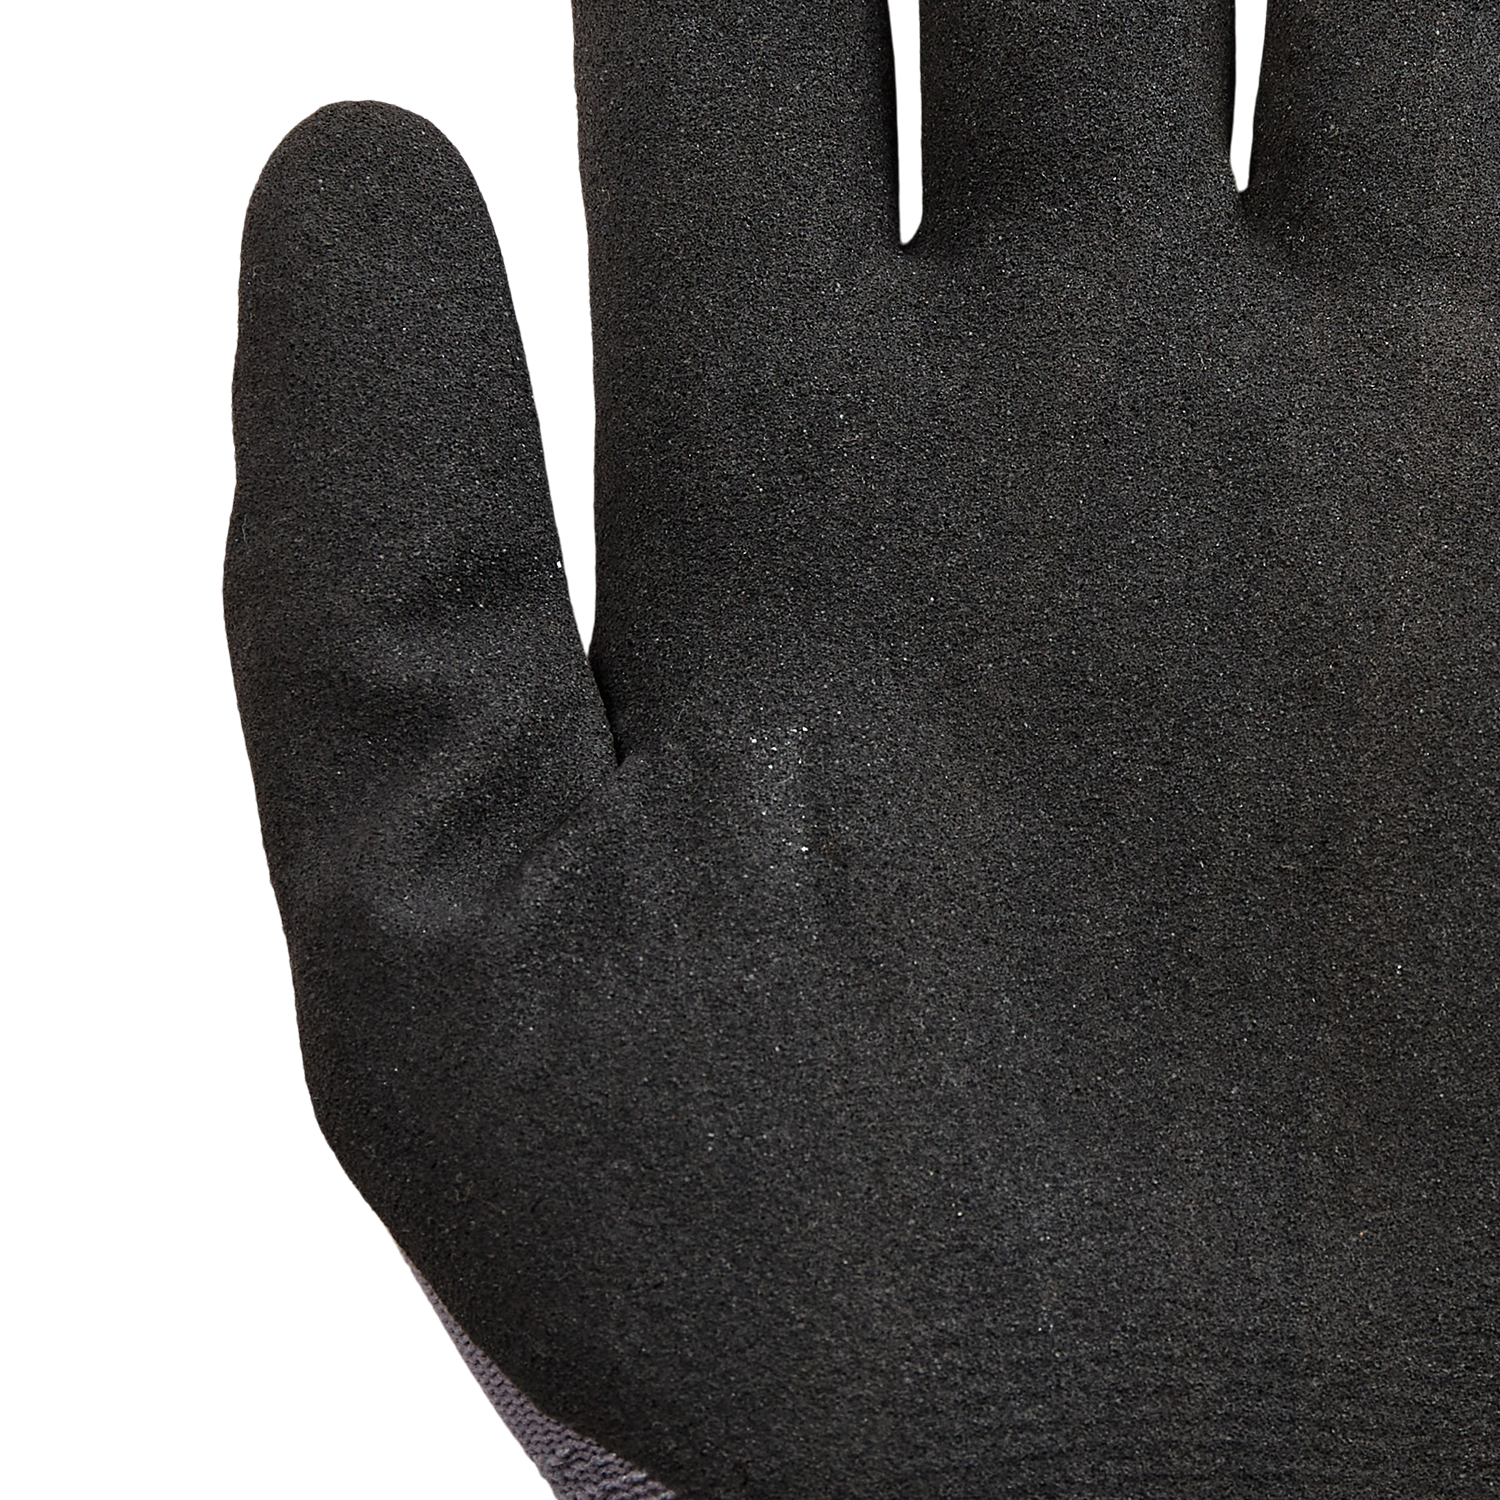 NORSE Flex Original assembly gloves size 10